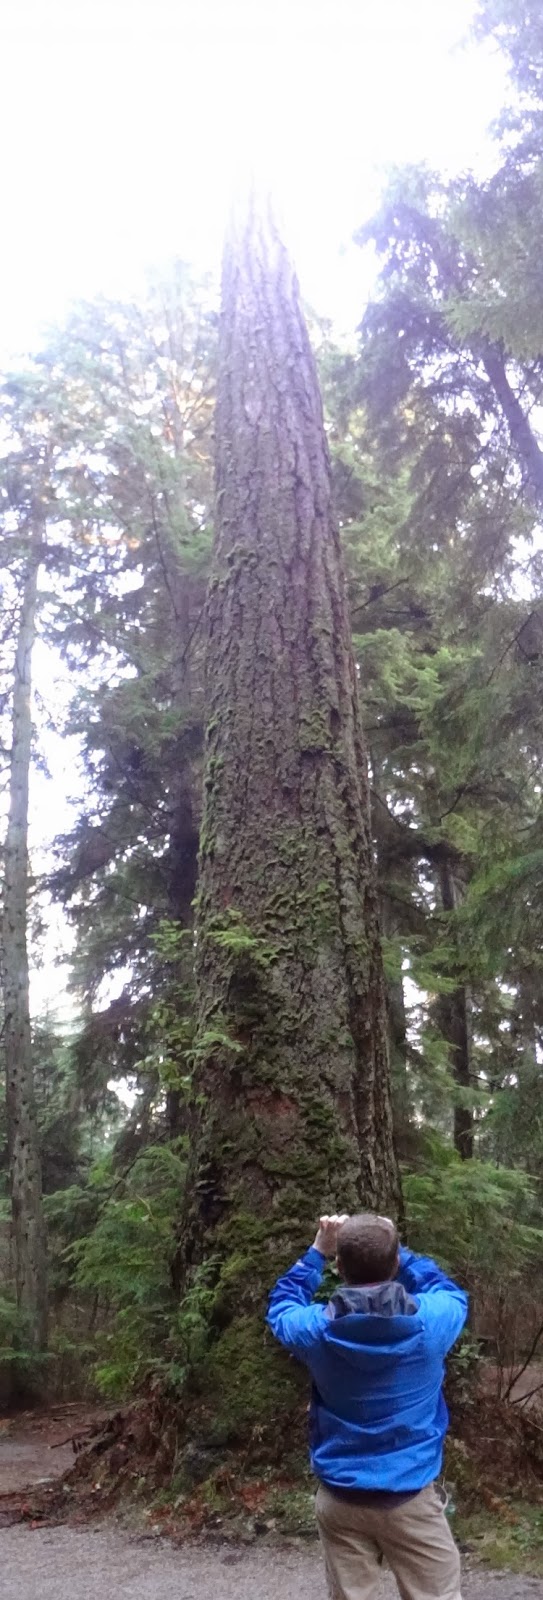 Huge tree in Vancouver's Stanley Park